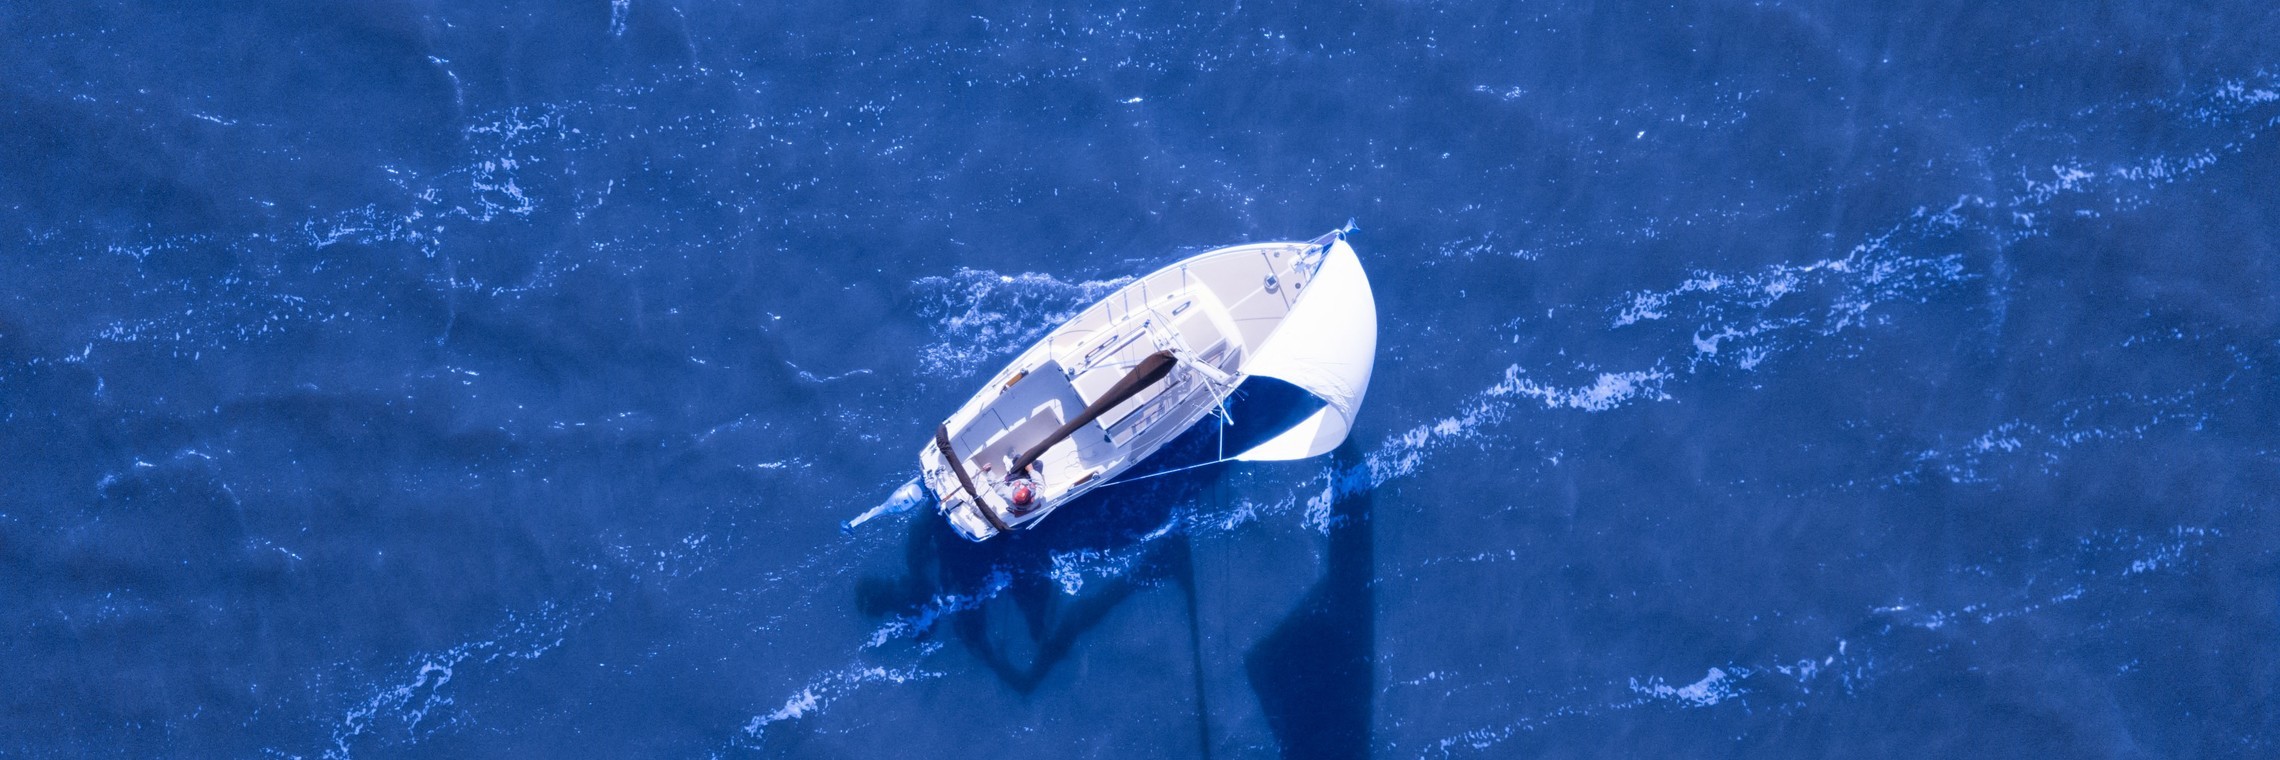 Sailboat on open ocean 